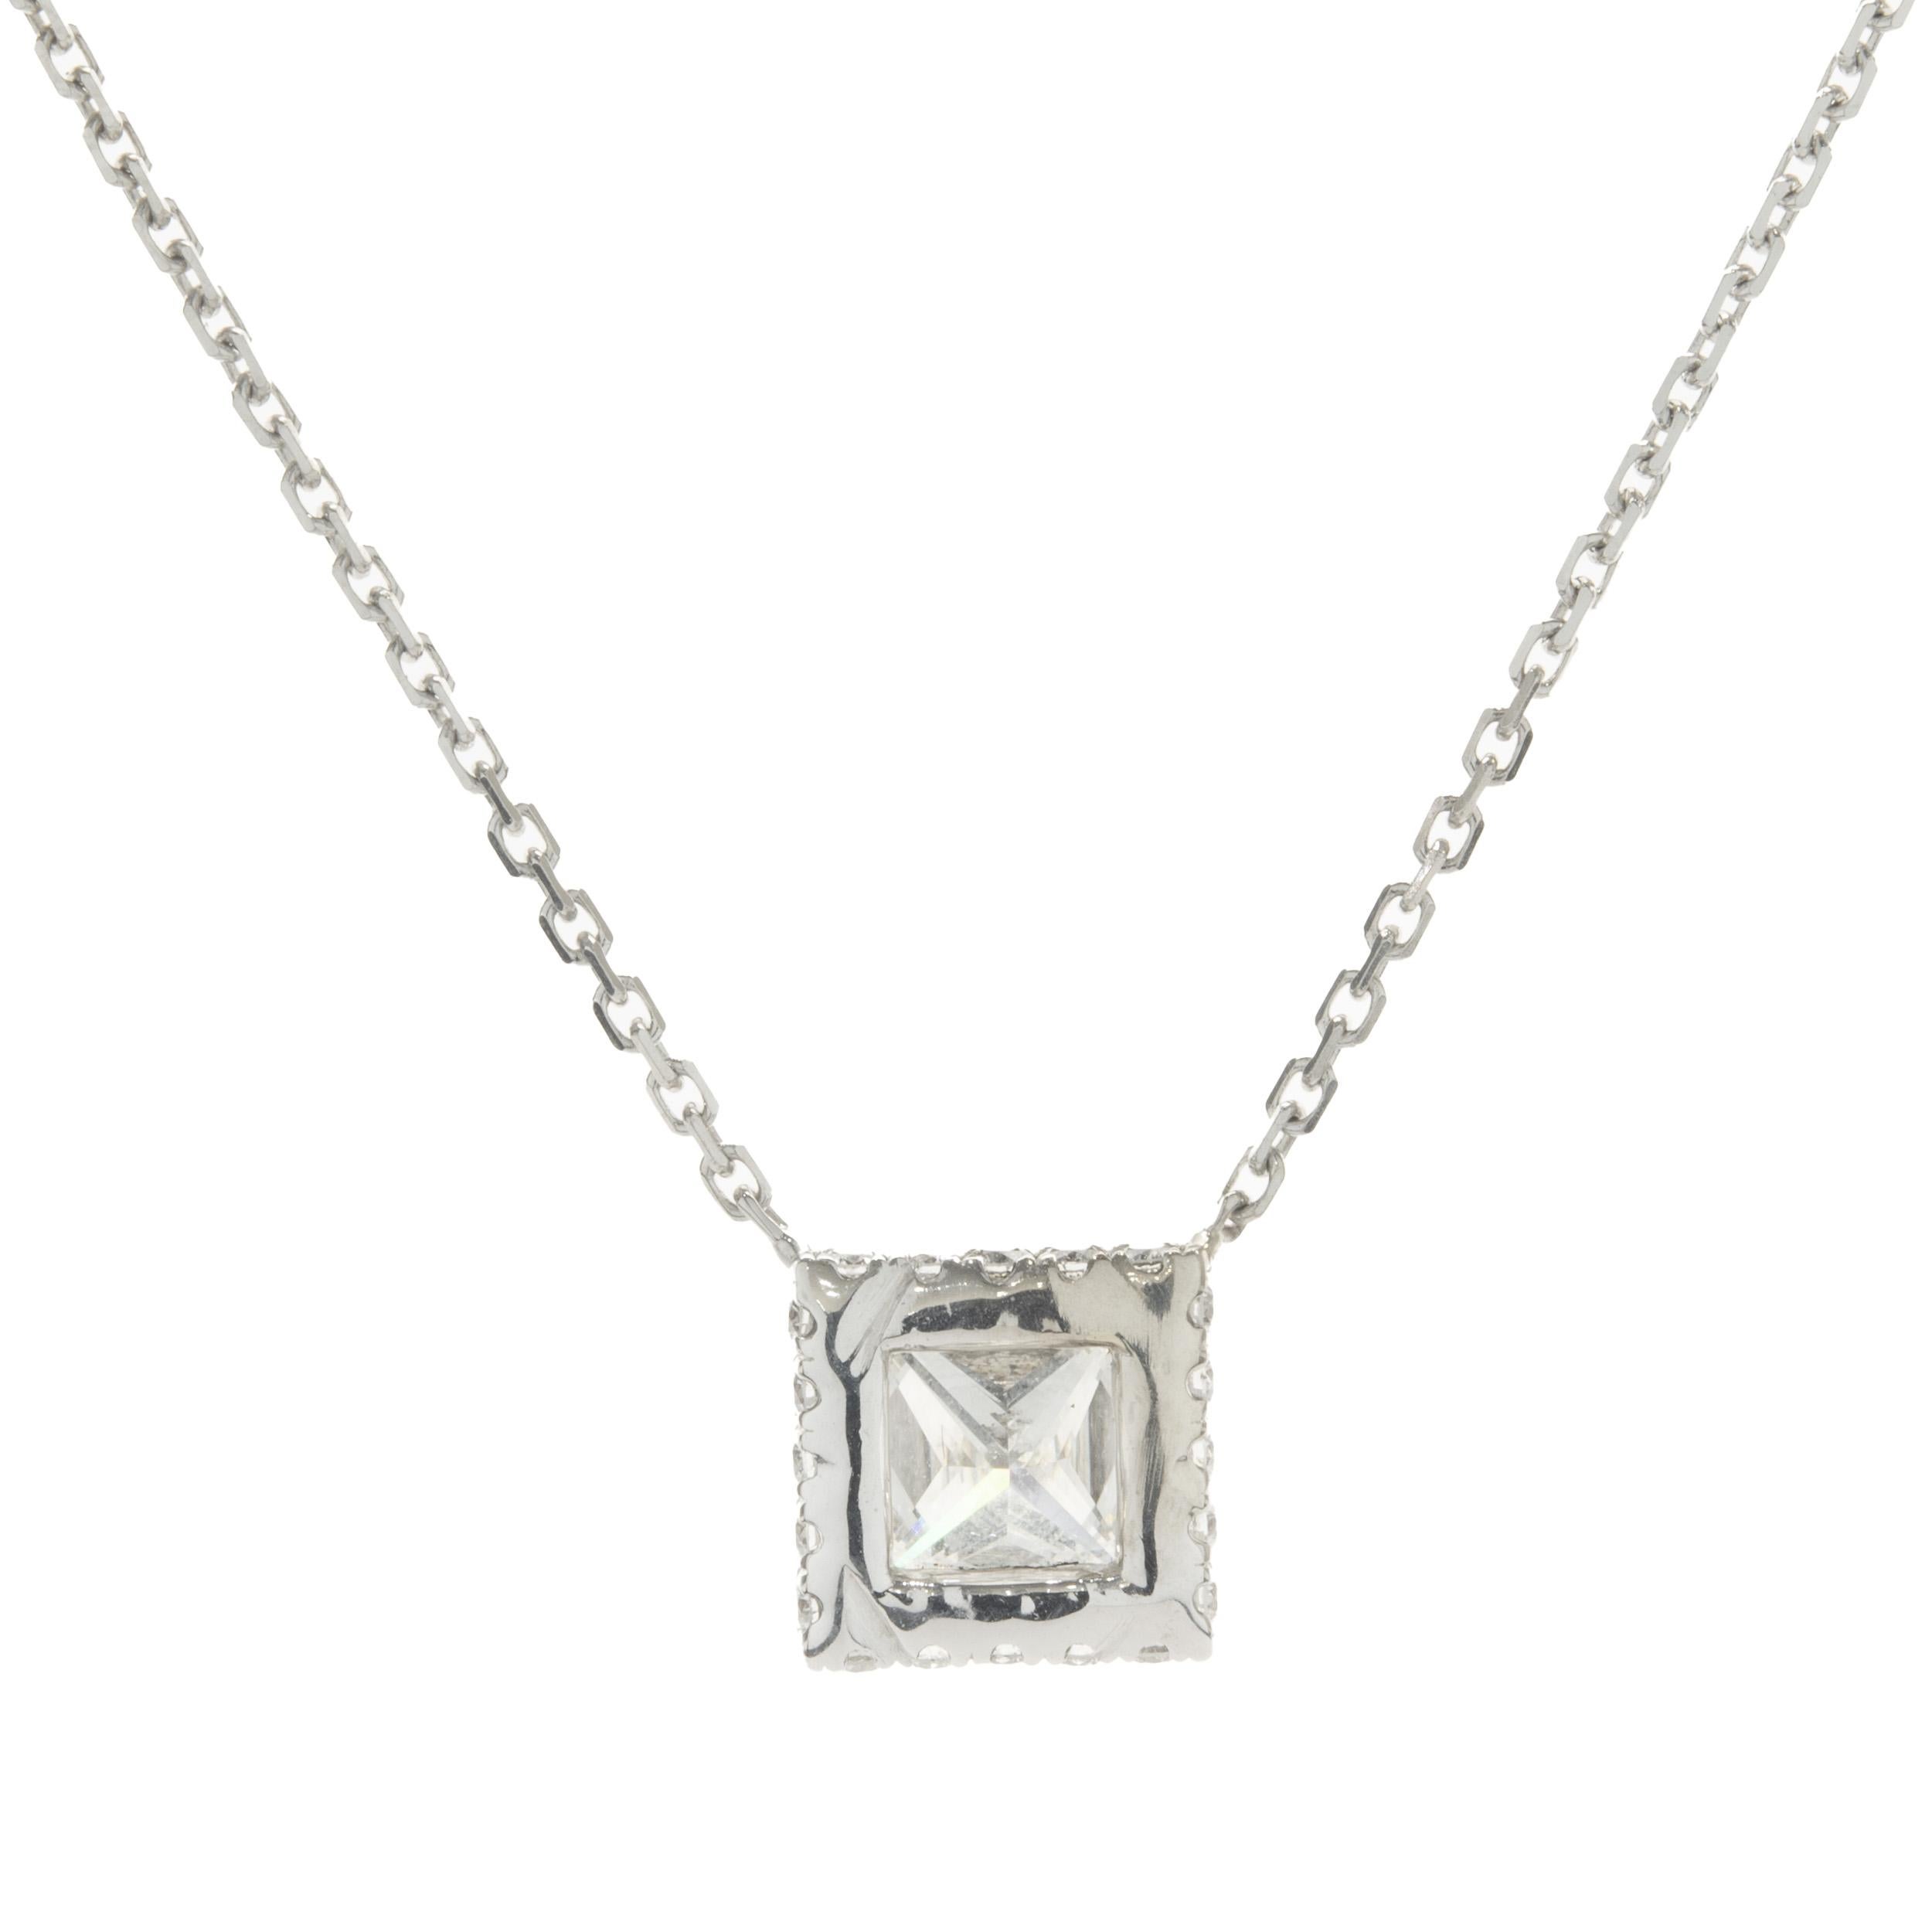 Designer: custom design
Material: 14K white gold
Diamonds:  1 princess cut = 1.52cttw
Color: J
Clarity: VVS2
GIA: 5182982122
Diamond: 20 round brilliant cut = 0.20cttw
Color: G
Clarity: VS1-2
Dimensions: necklace measures 18-inches in length